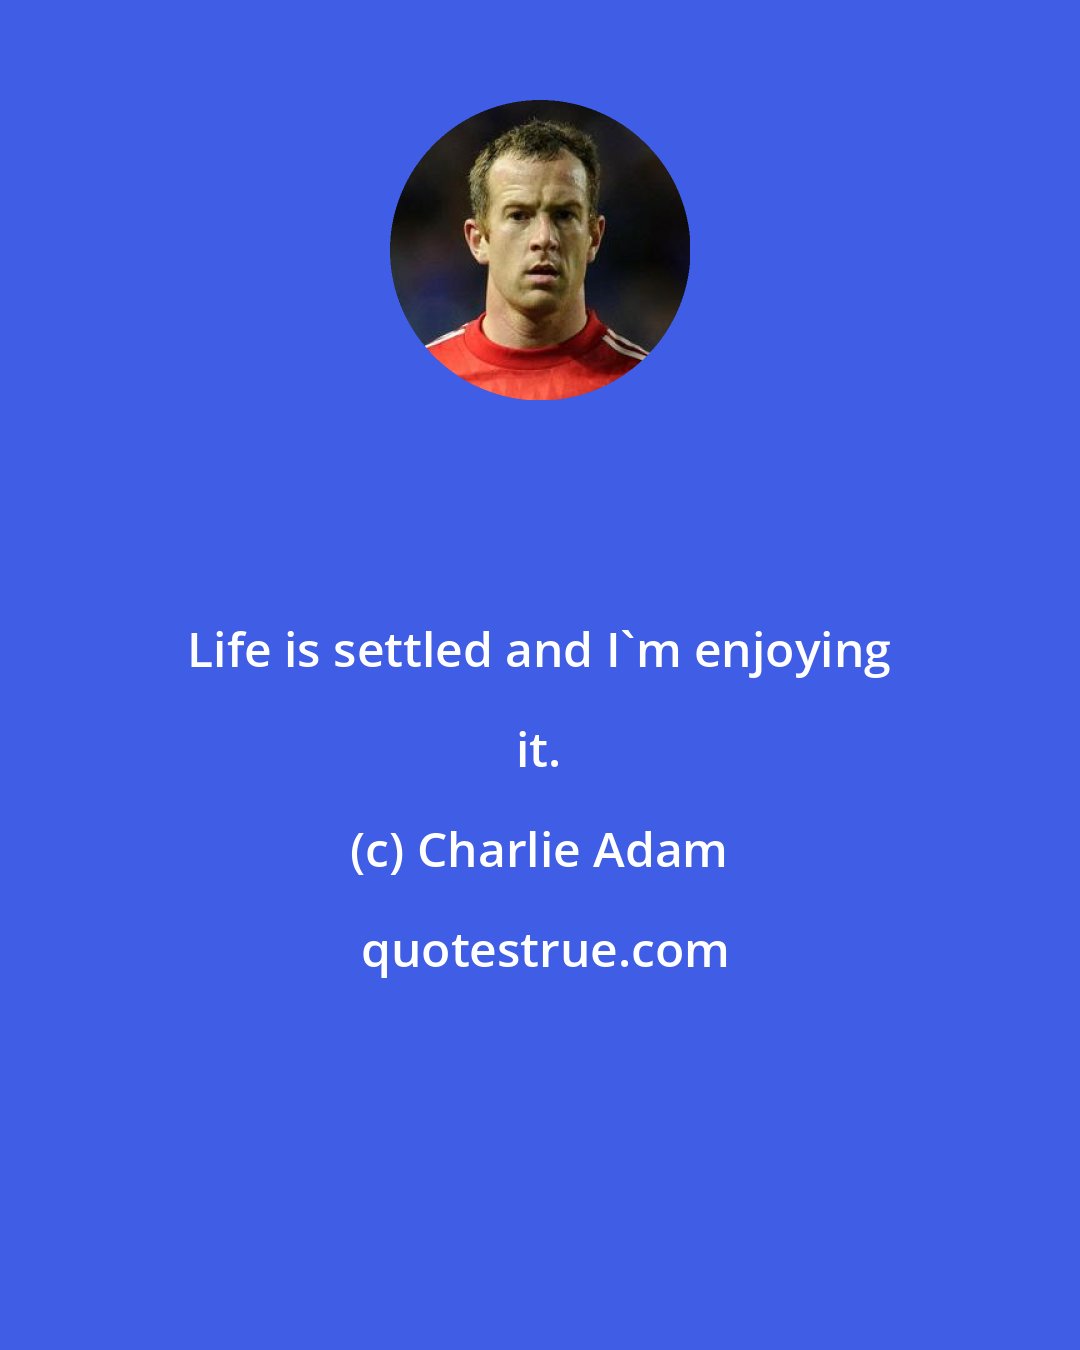 Charlie Adam: Life is settled and I'm enjoying it.